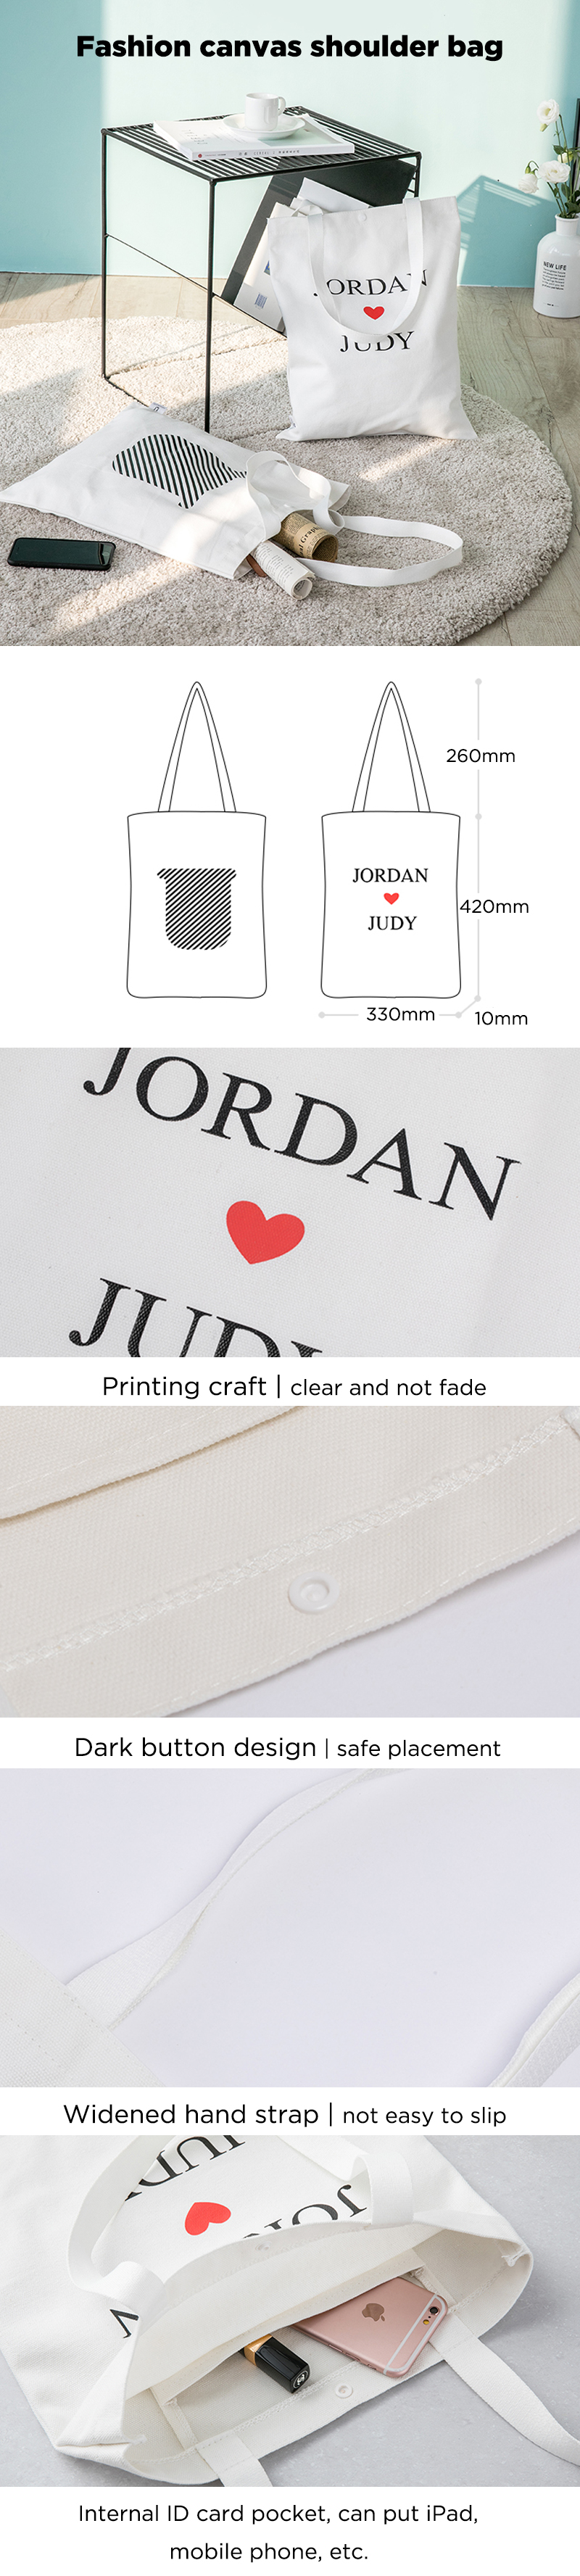 JordanJudy-138L-Canvas-Shoulder-Bag-Leisure-Handbag-Shopping-Bag-Outdoor-Travel-1477199-1